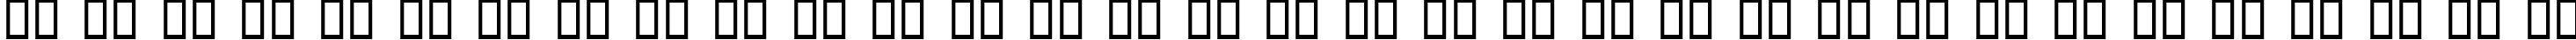 Пример написания русского алфавита шрифтом Marcusia